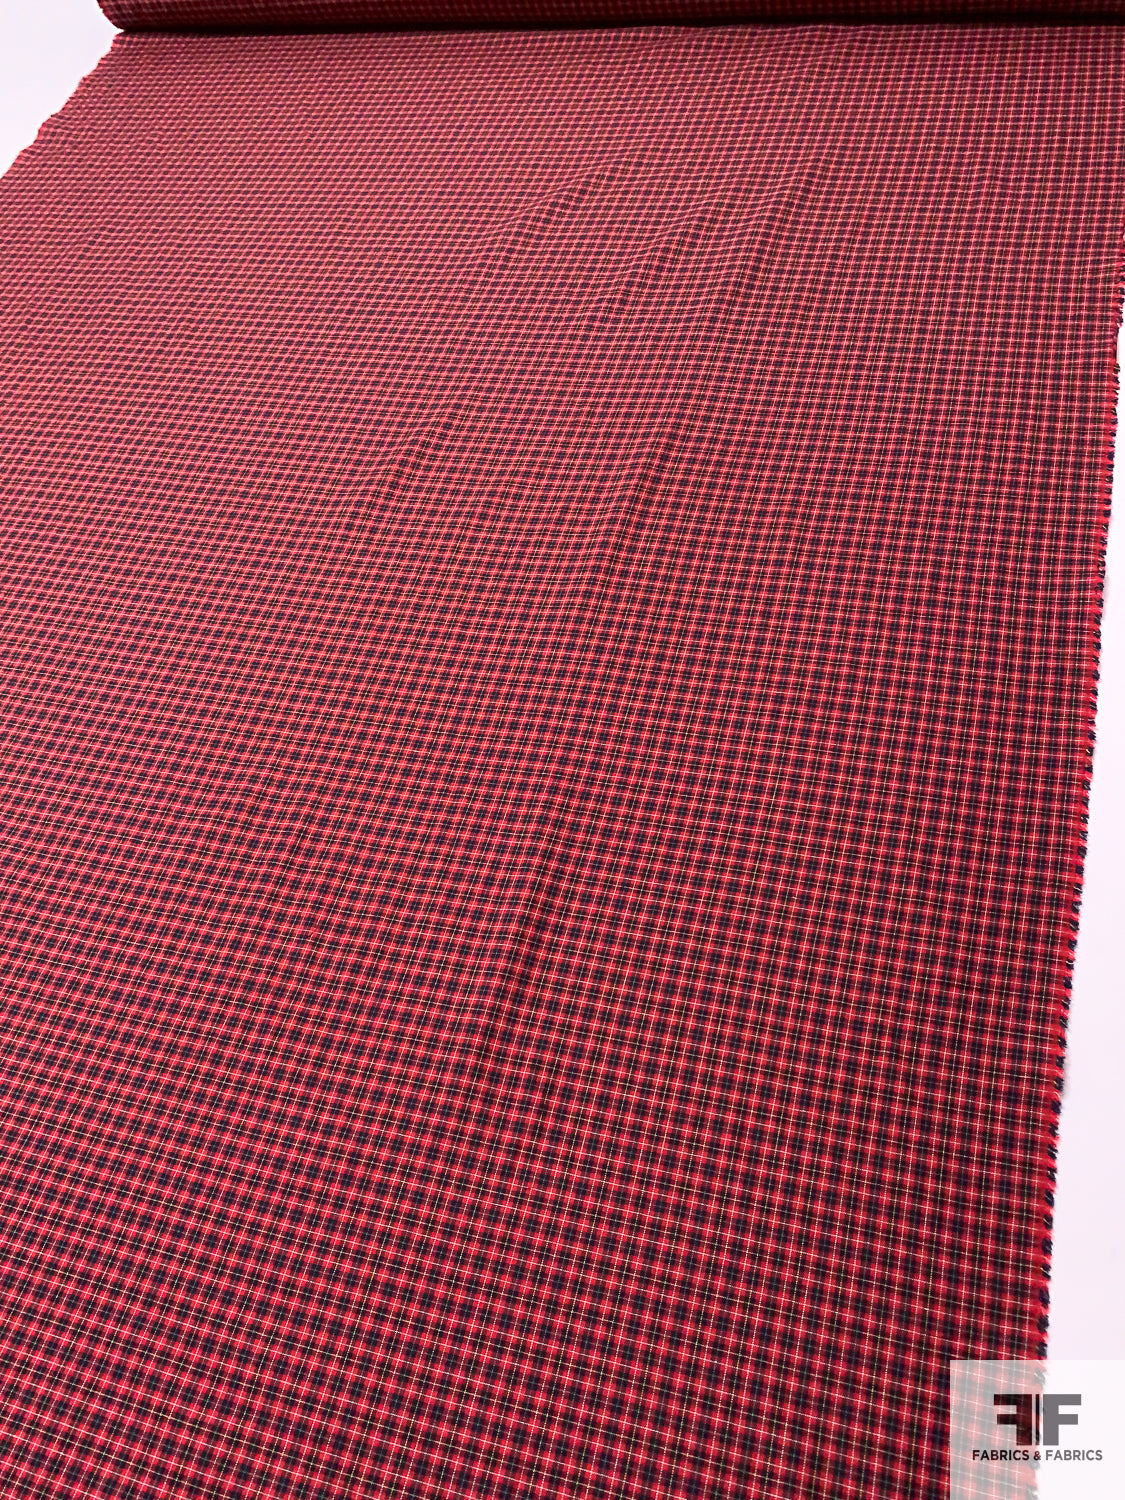 Made in Japan Yarn-Dyed Gingham Plaid Cotton Shirting - Red / Navy / Tangerine / White